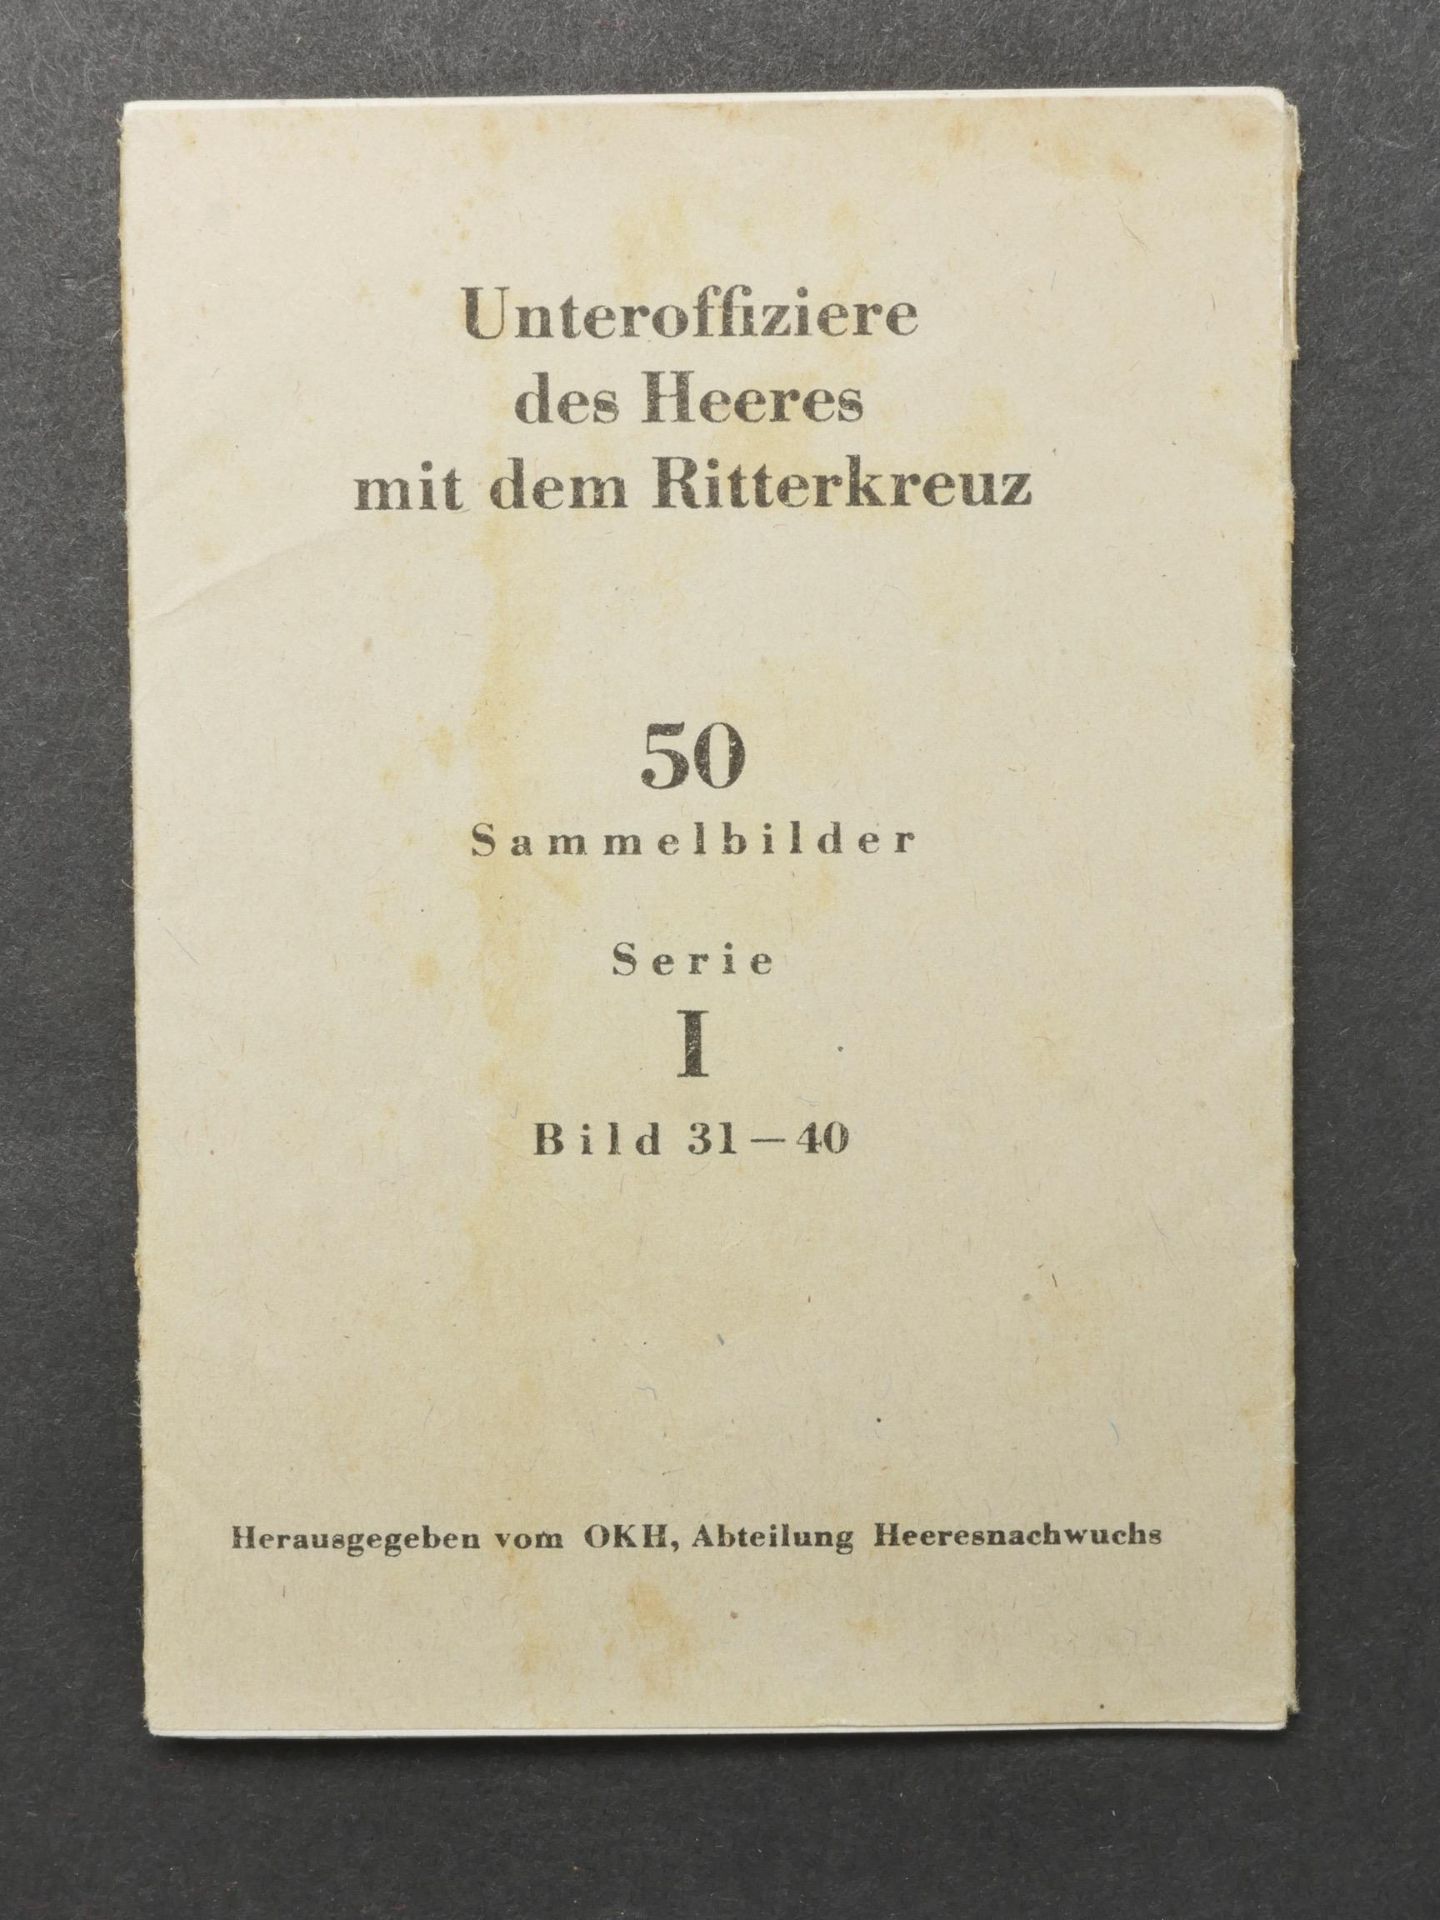 Livret Unteroffiziere des Heeres. Booklet Unteroffiziere des Heeres.  - Image 5 of 5